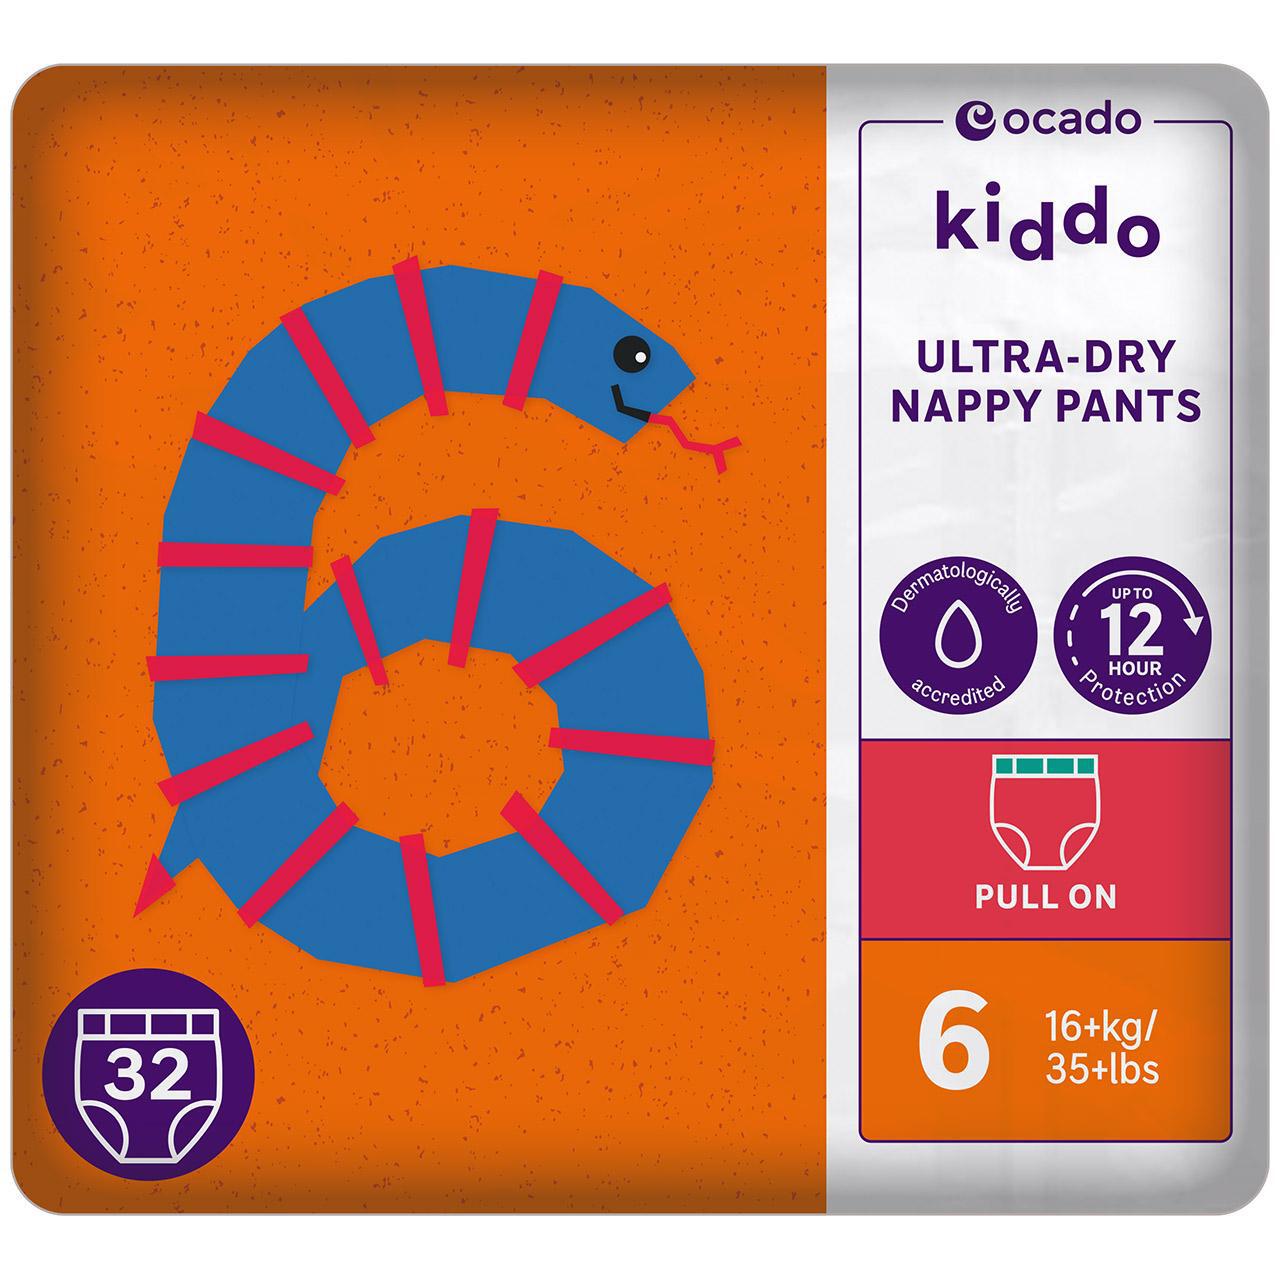 Ocado Kiddo Ultra-Dry Nappy Pants Size 6 (16kg+) 32 per pack